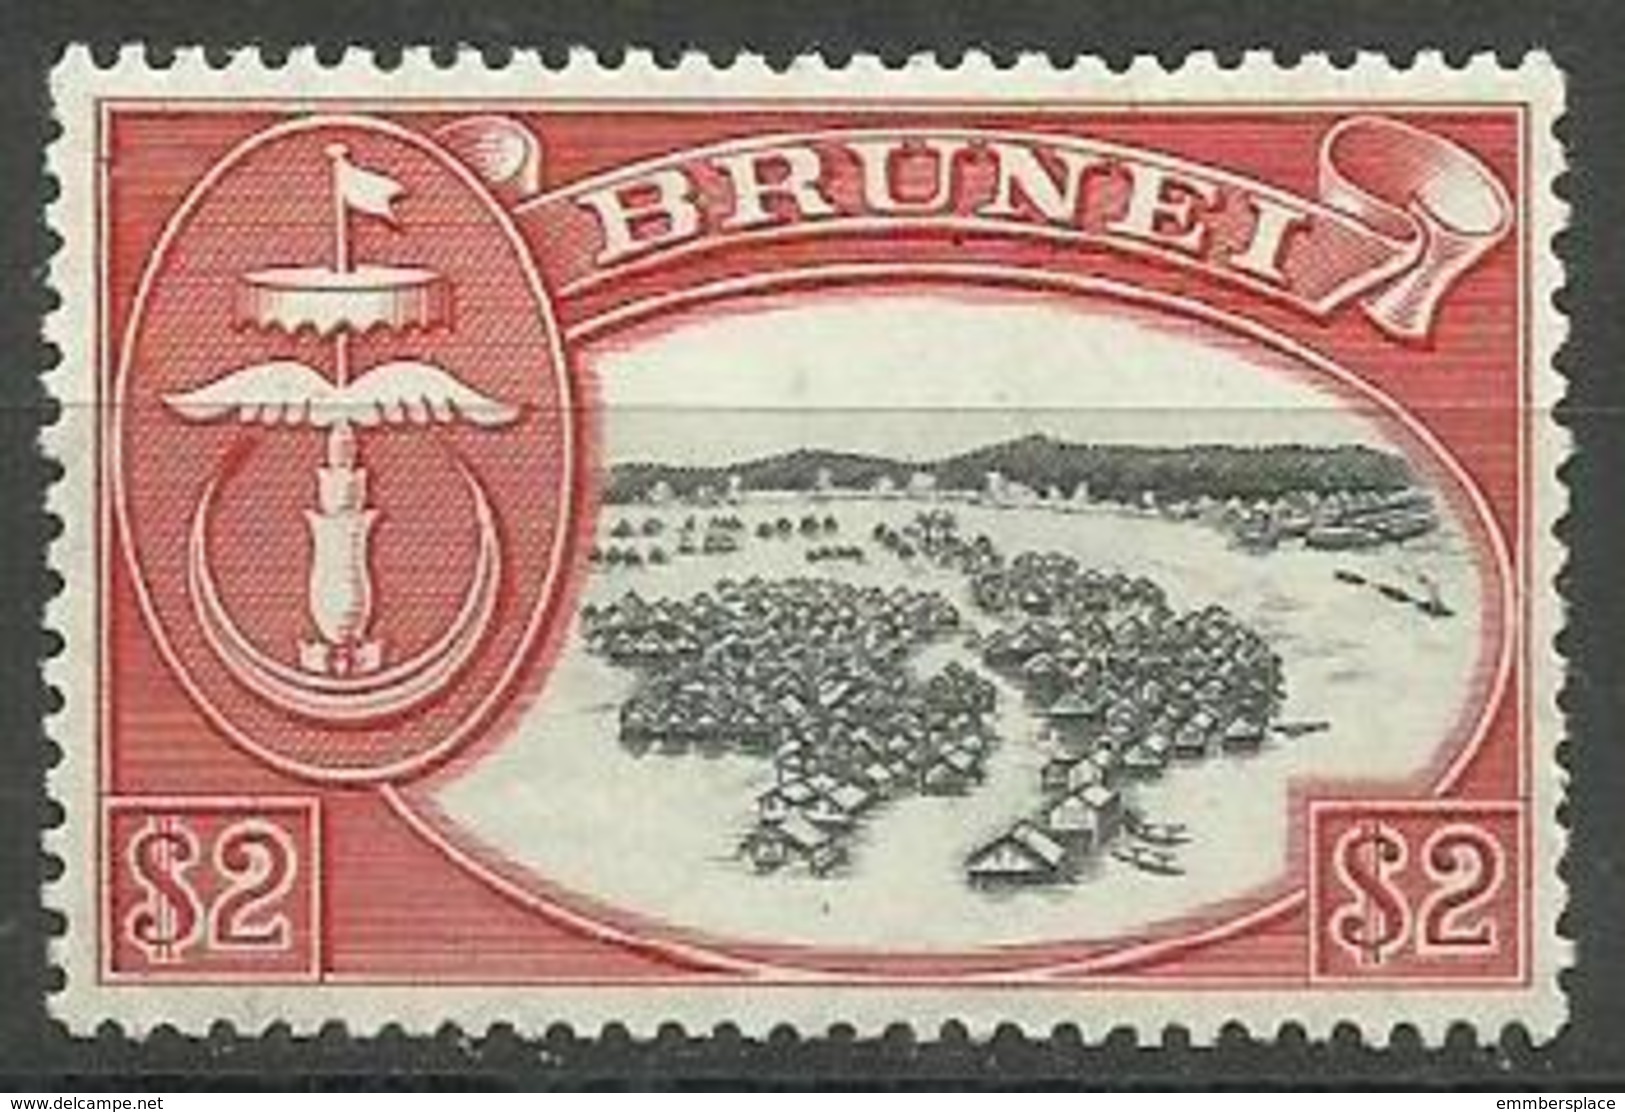 Brunei - 1952 Emblem & River Scene $2 MLH     Sc 95 - Brunei (...-1984)